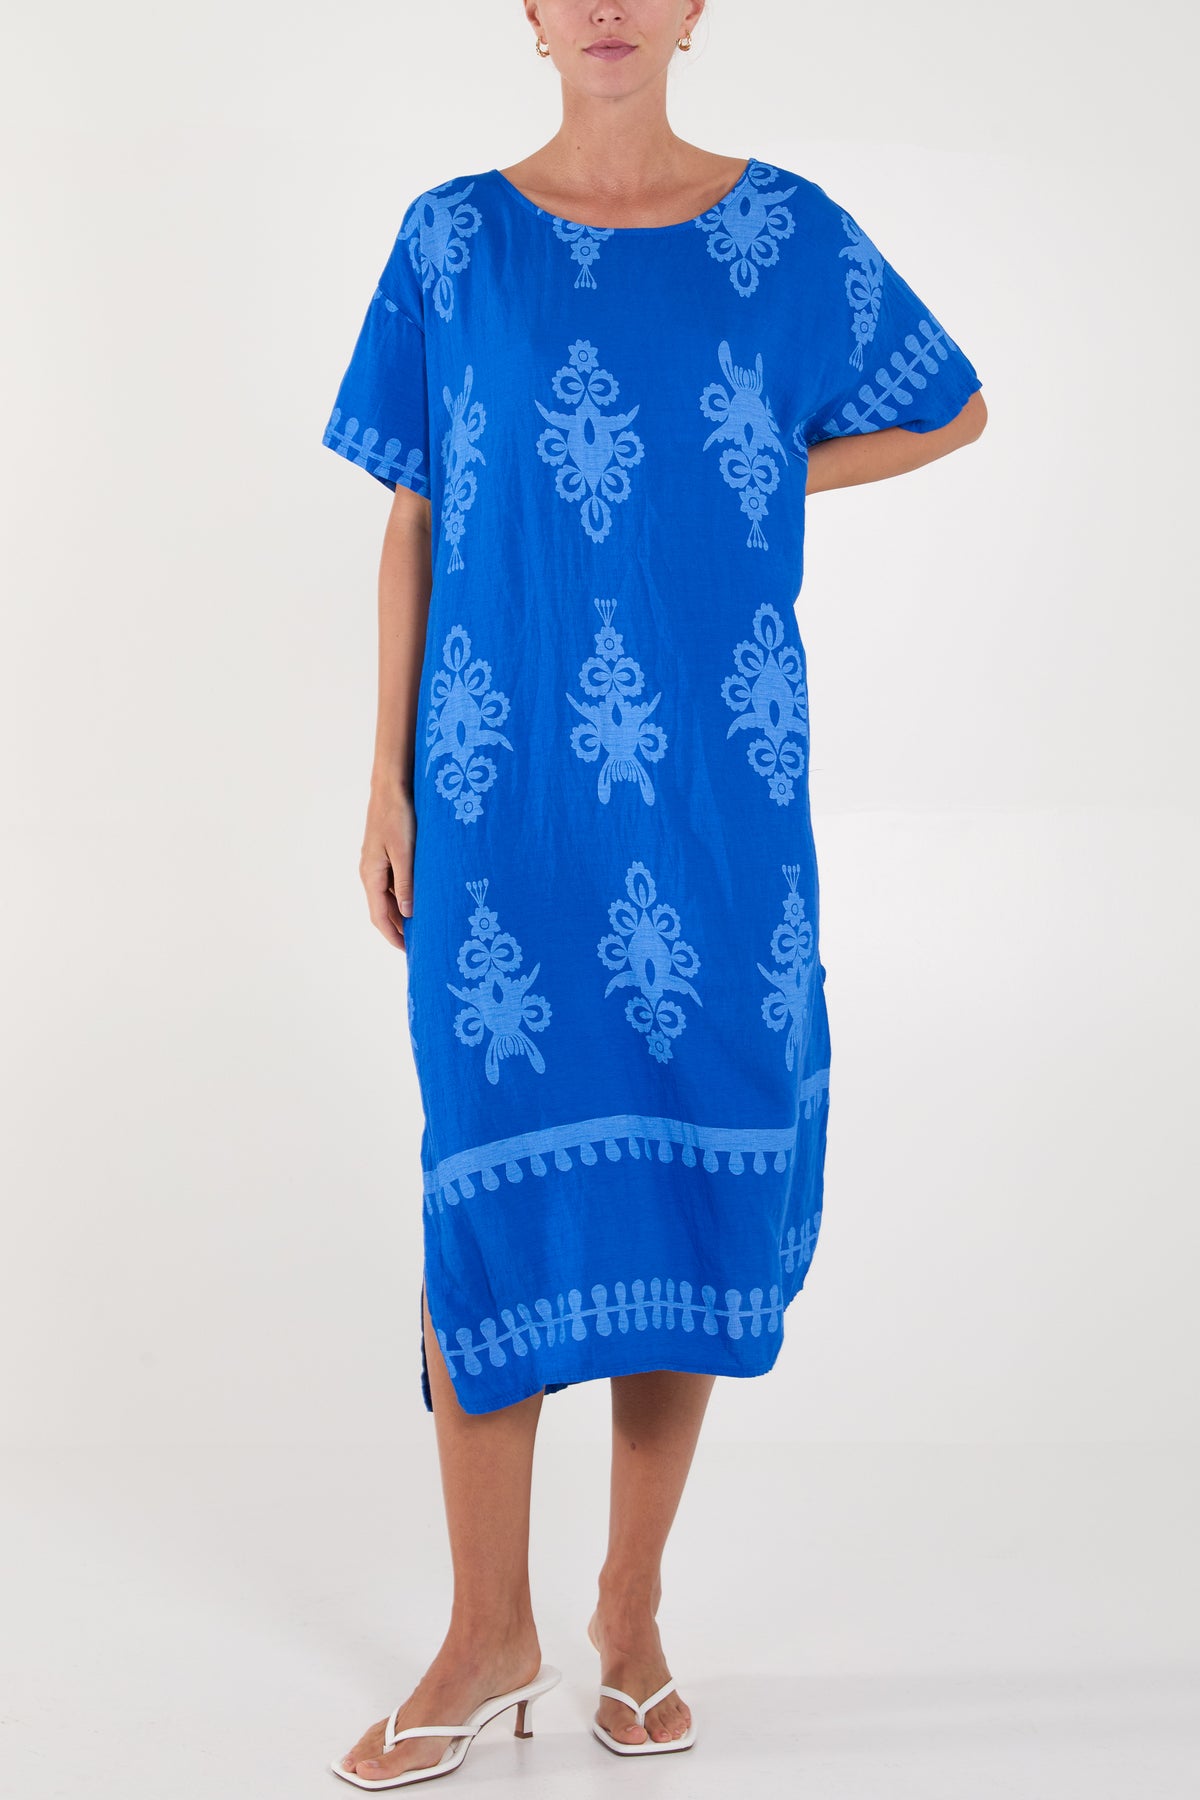 Tribal Print Tunic Dress w/ Pockets